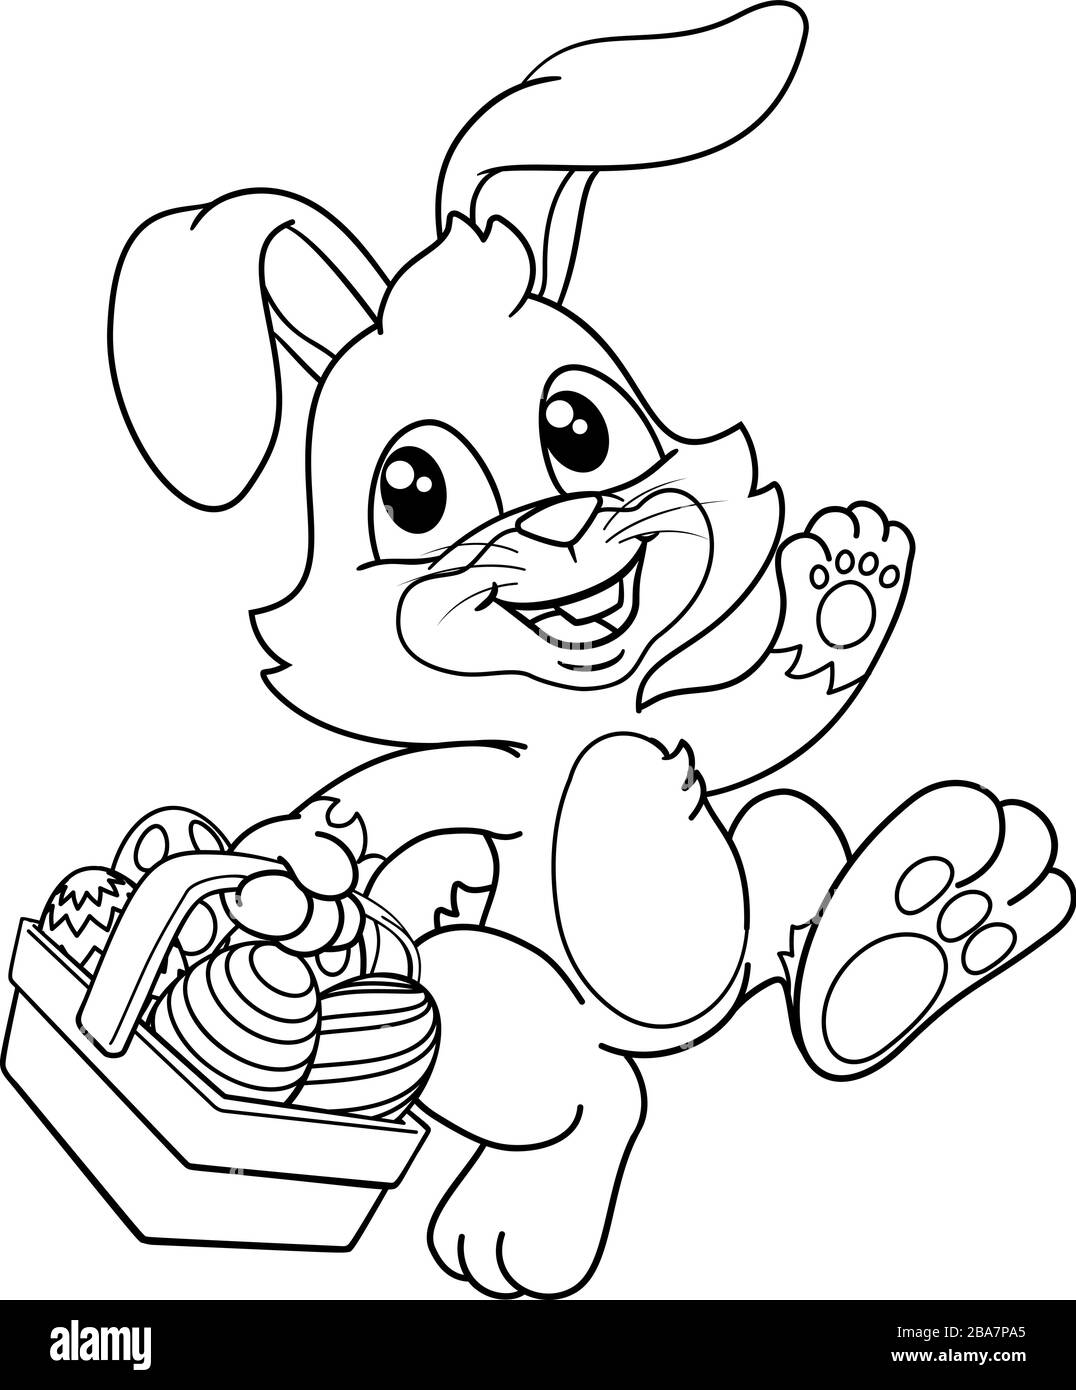 Easter Bunny Rabbit Eggs Basket Cartoon Stock Vector Image & Art - Alamy